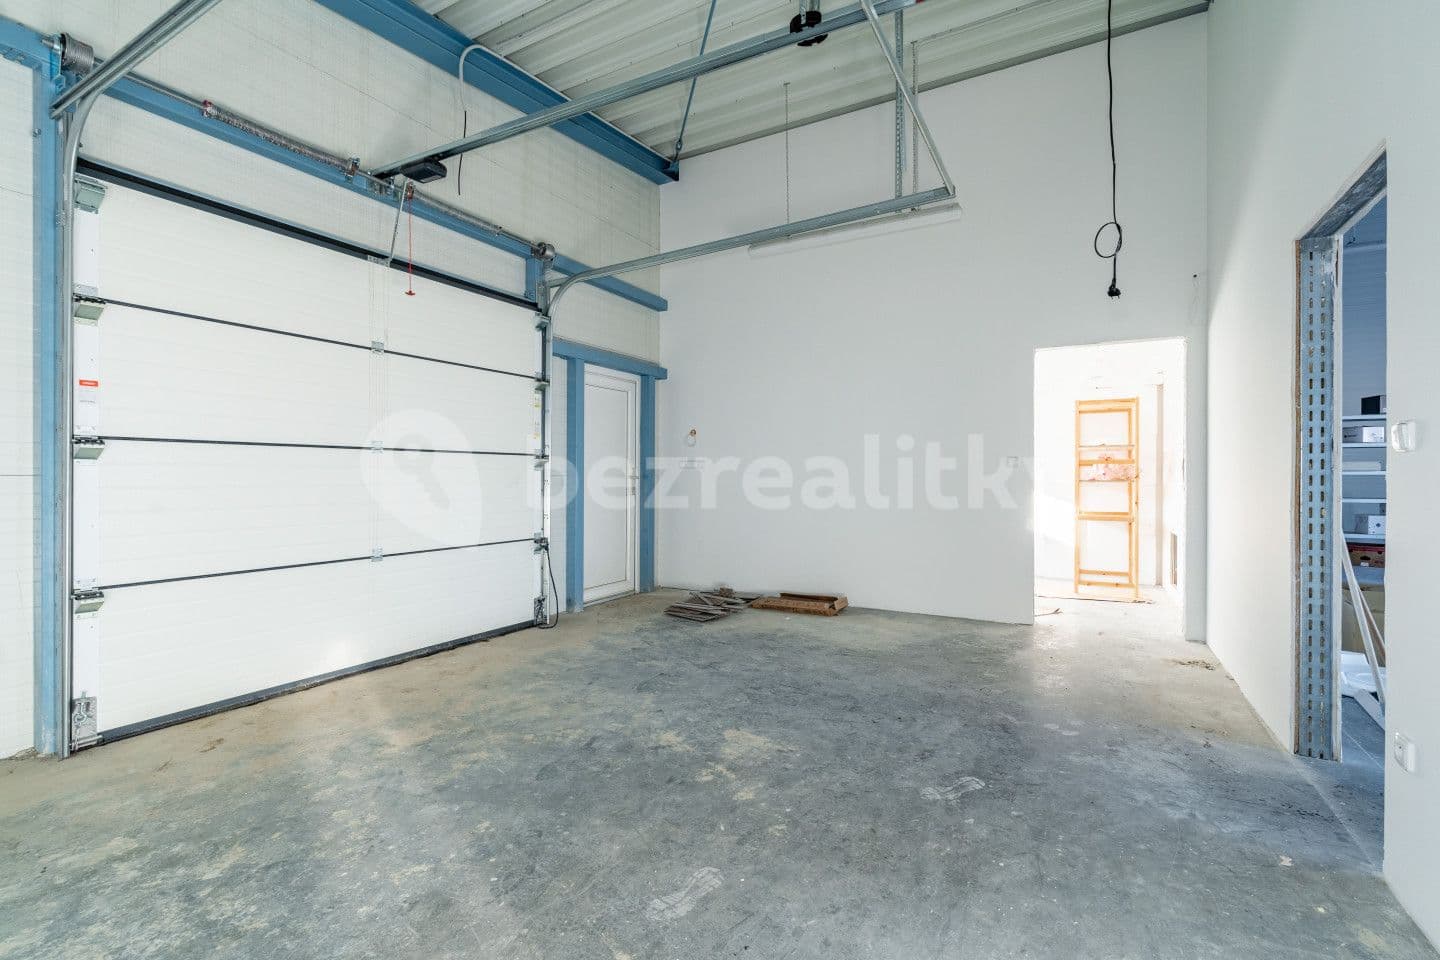 non-residential property for sale, 1,340 m², Oslavice, Vysočina Region